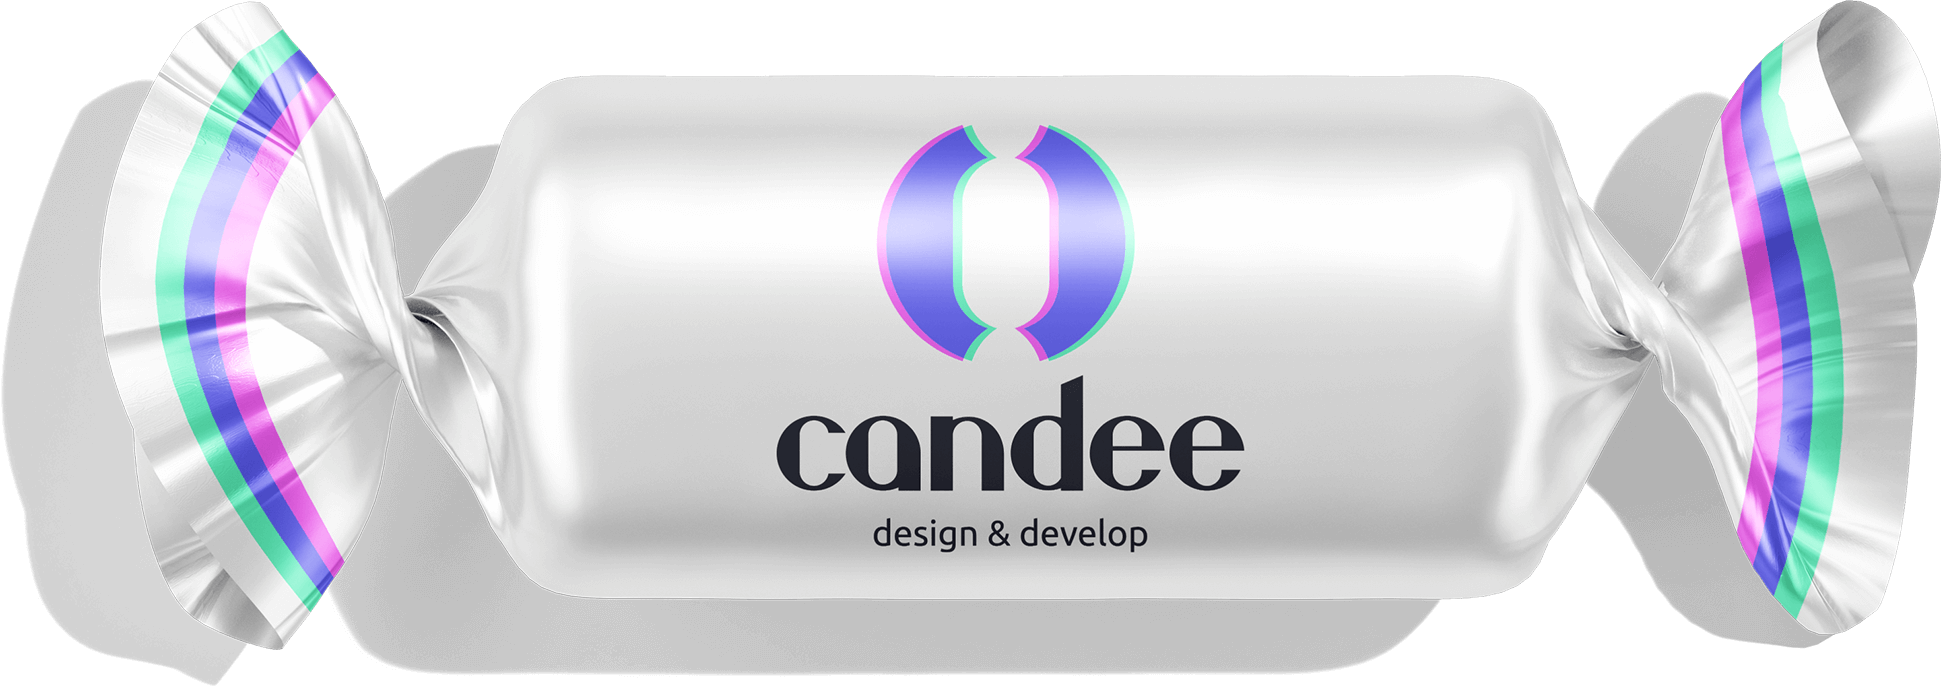 candee logo